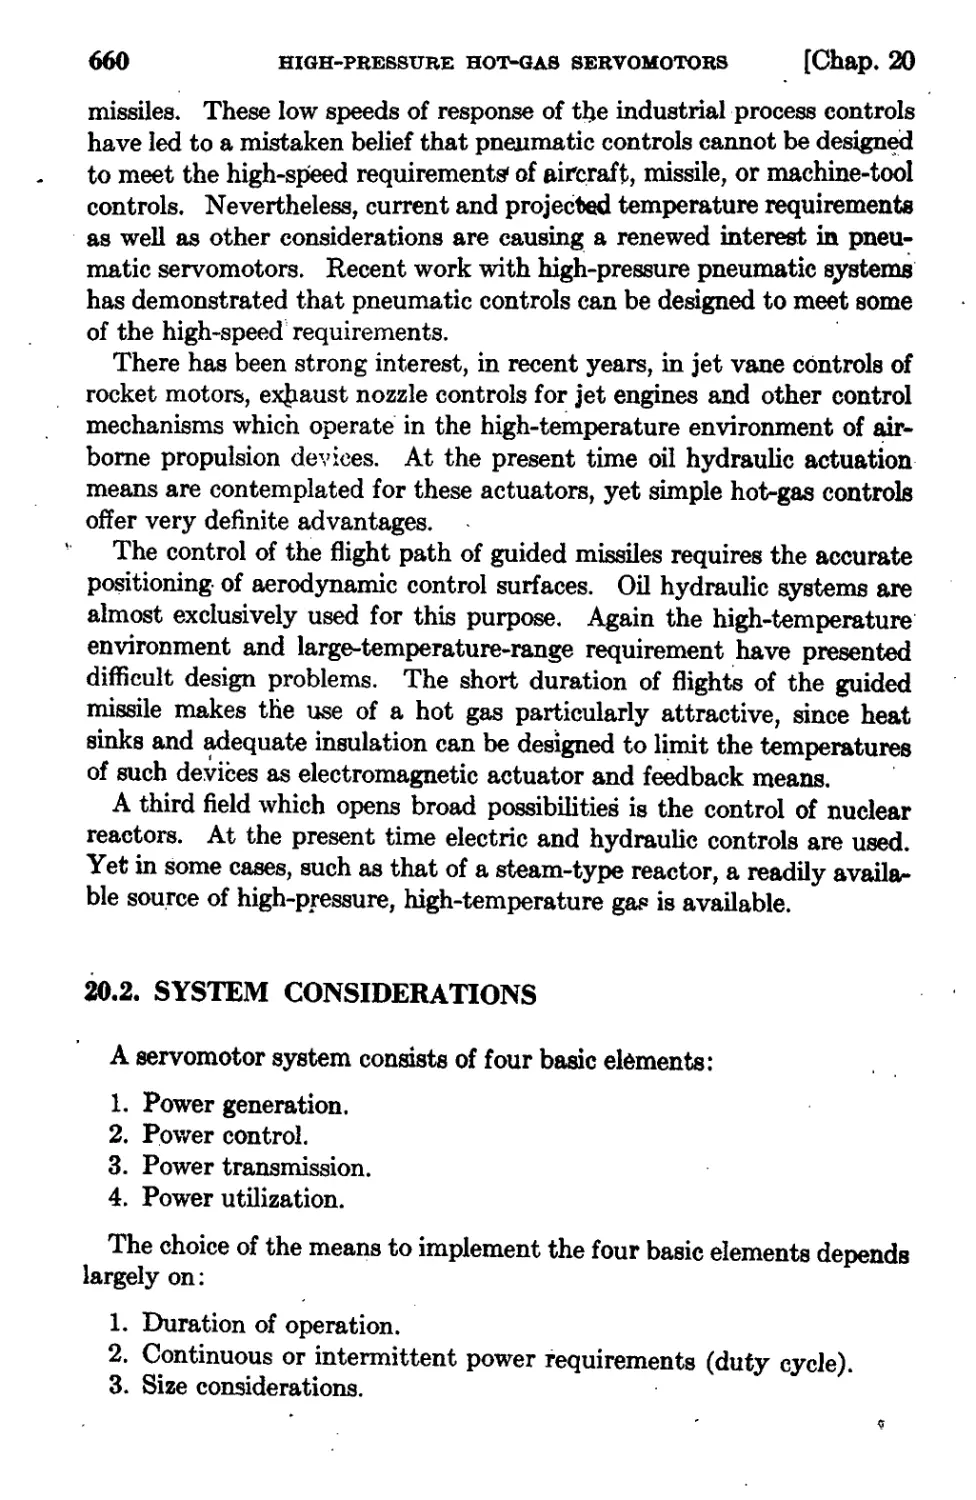 20.2 System Considerations